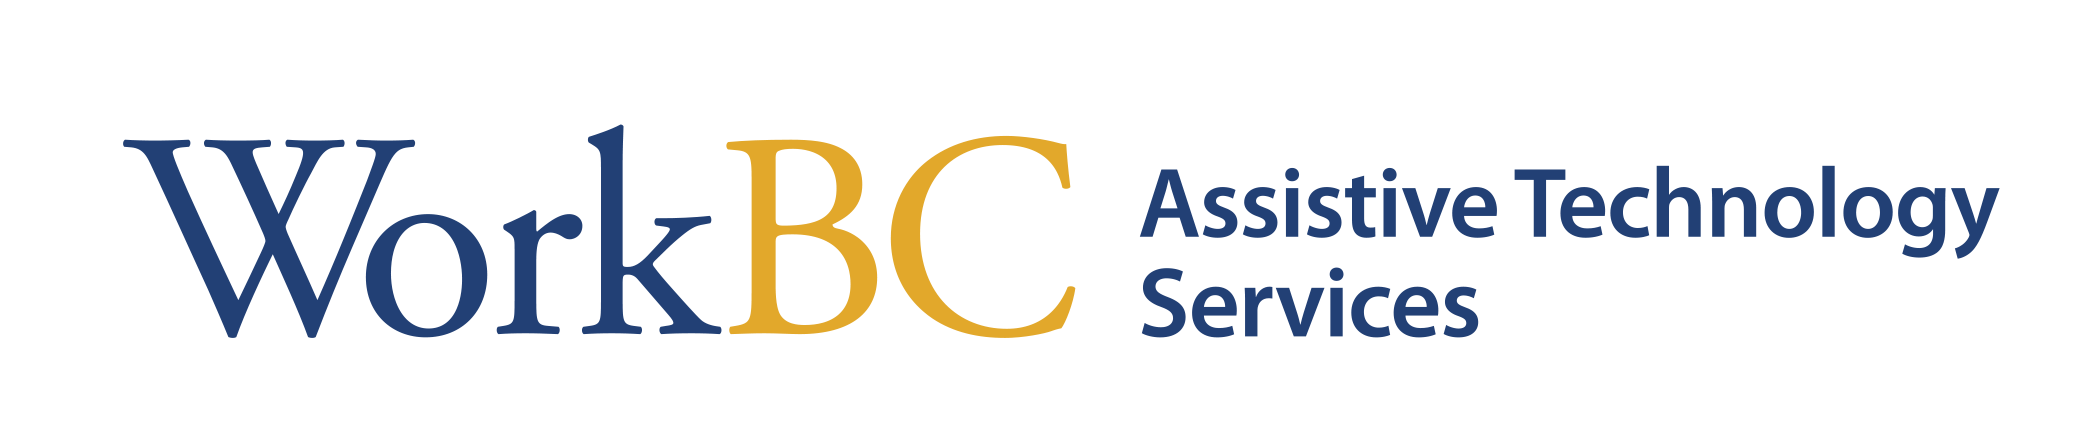 WorkBC Assistive Technology Services logo